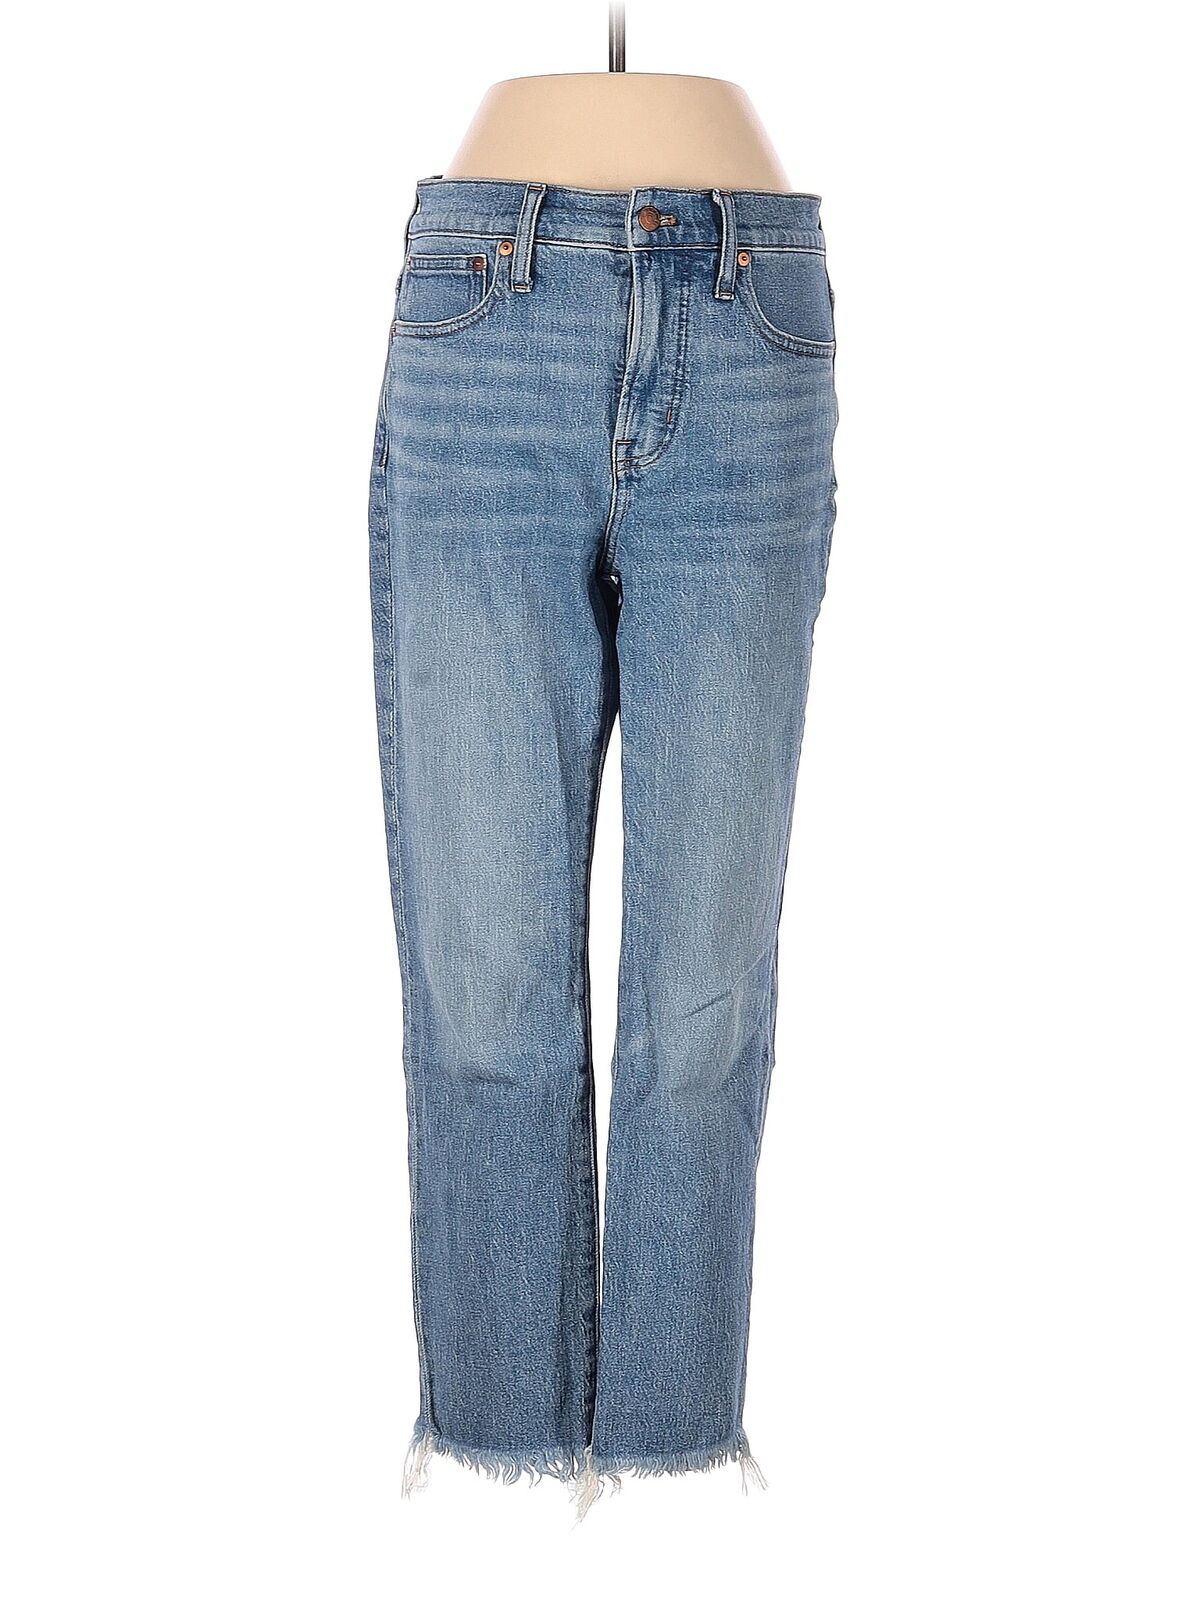 Madewell Women Blue Jeans 26 W Petites - image 1